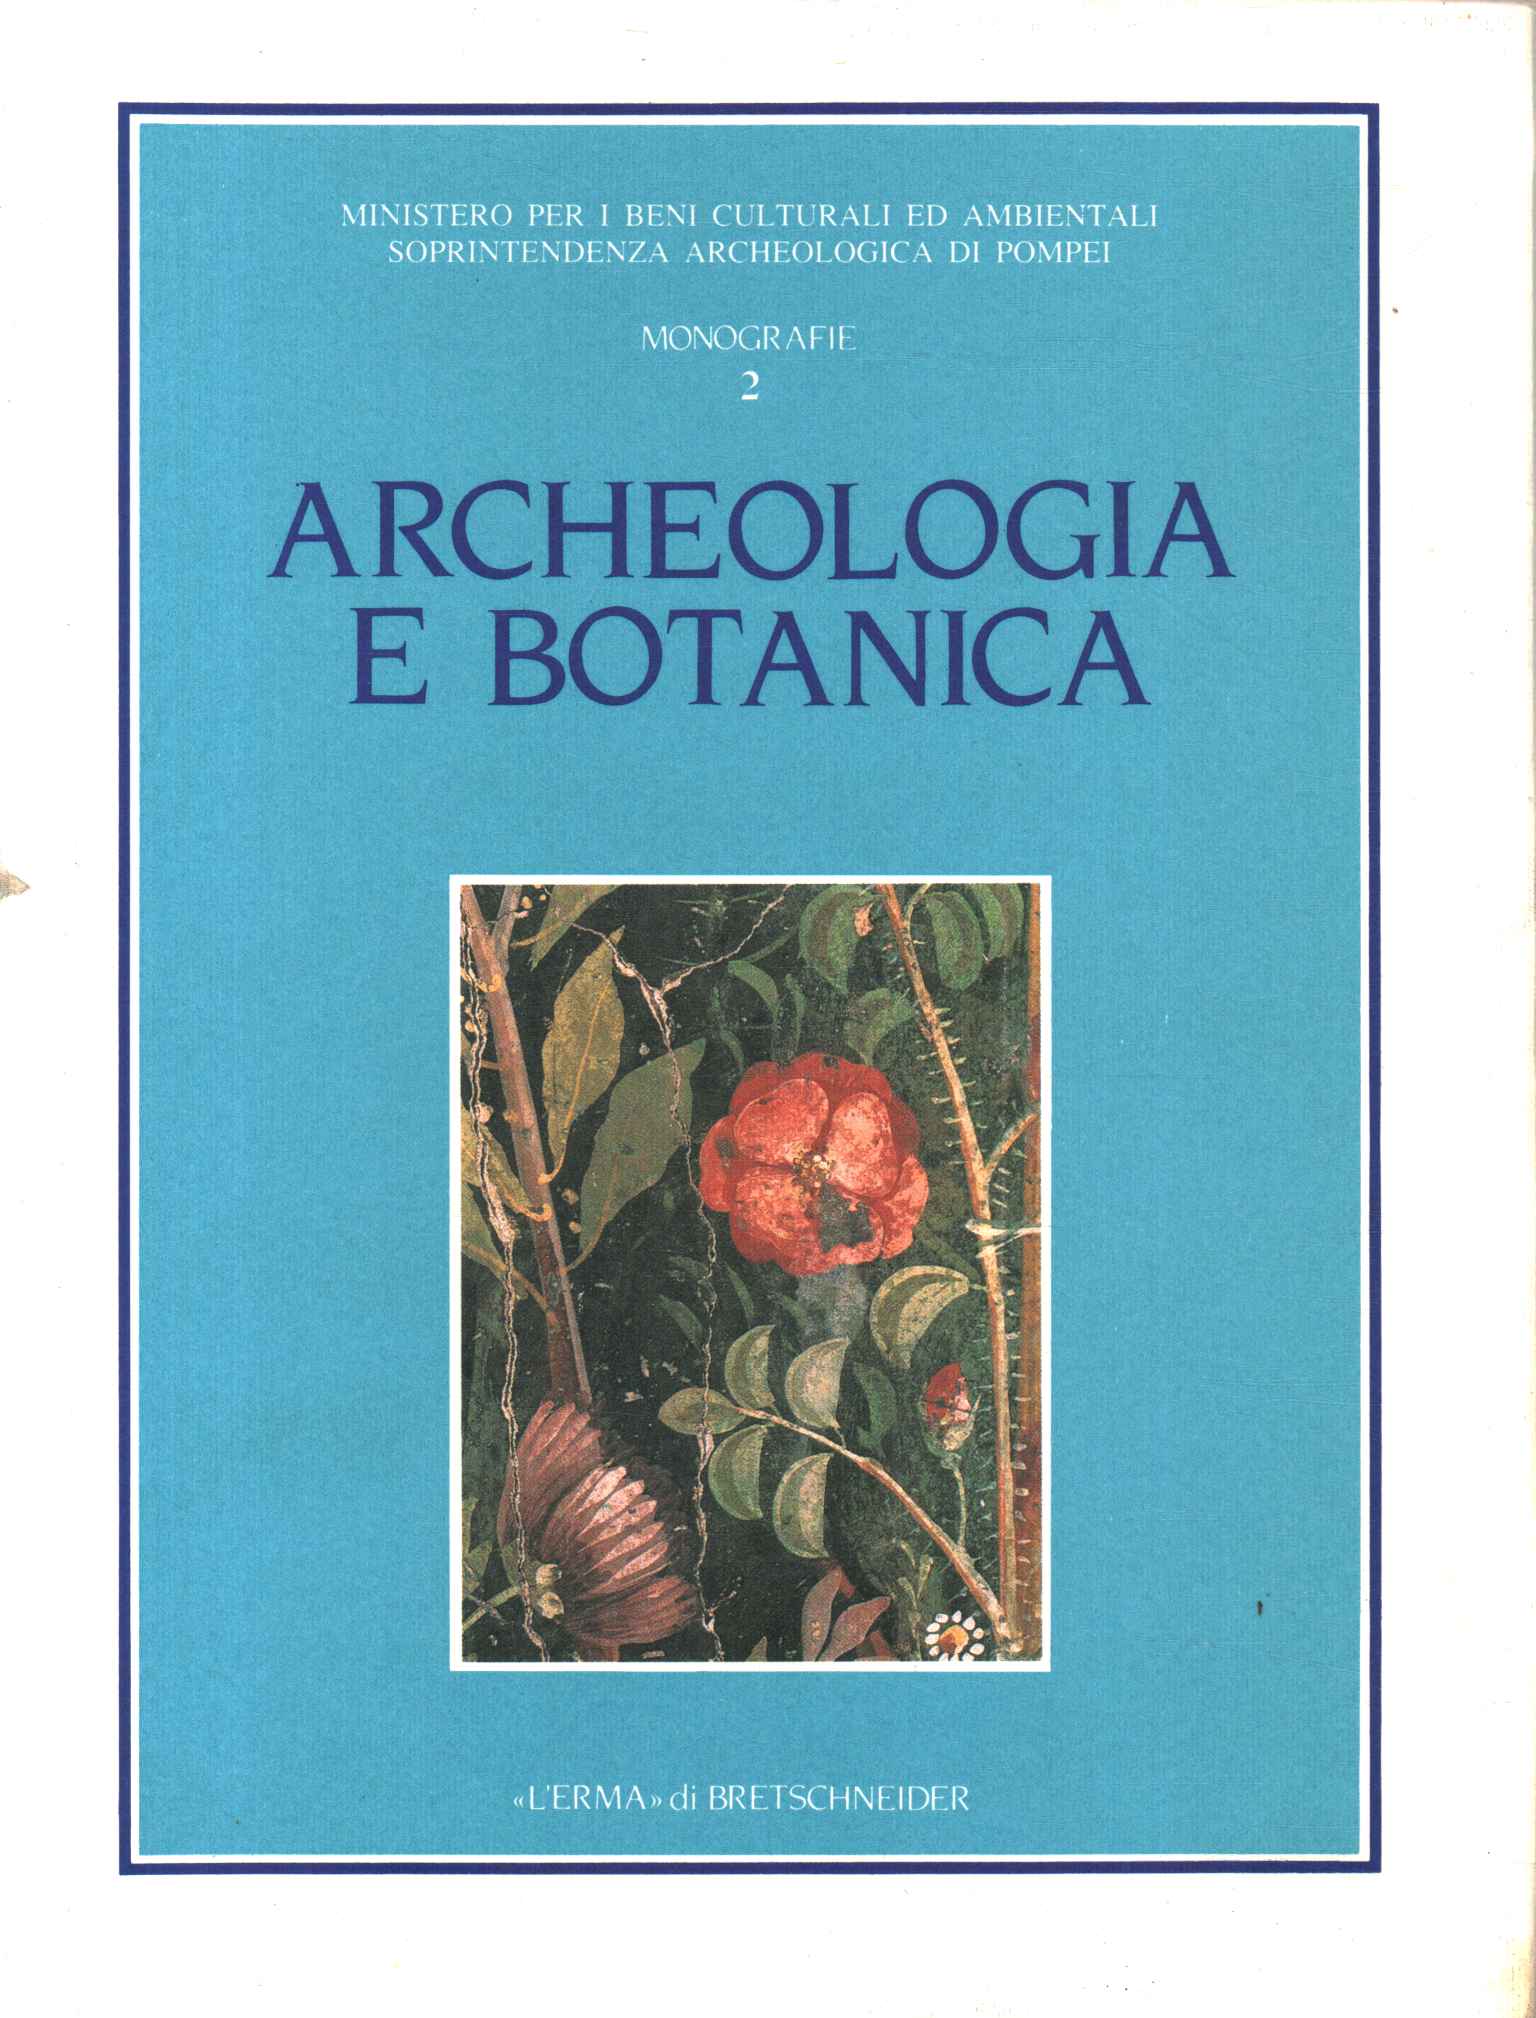 Archeology and botany